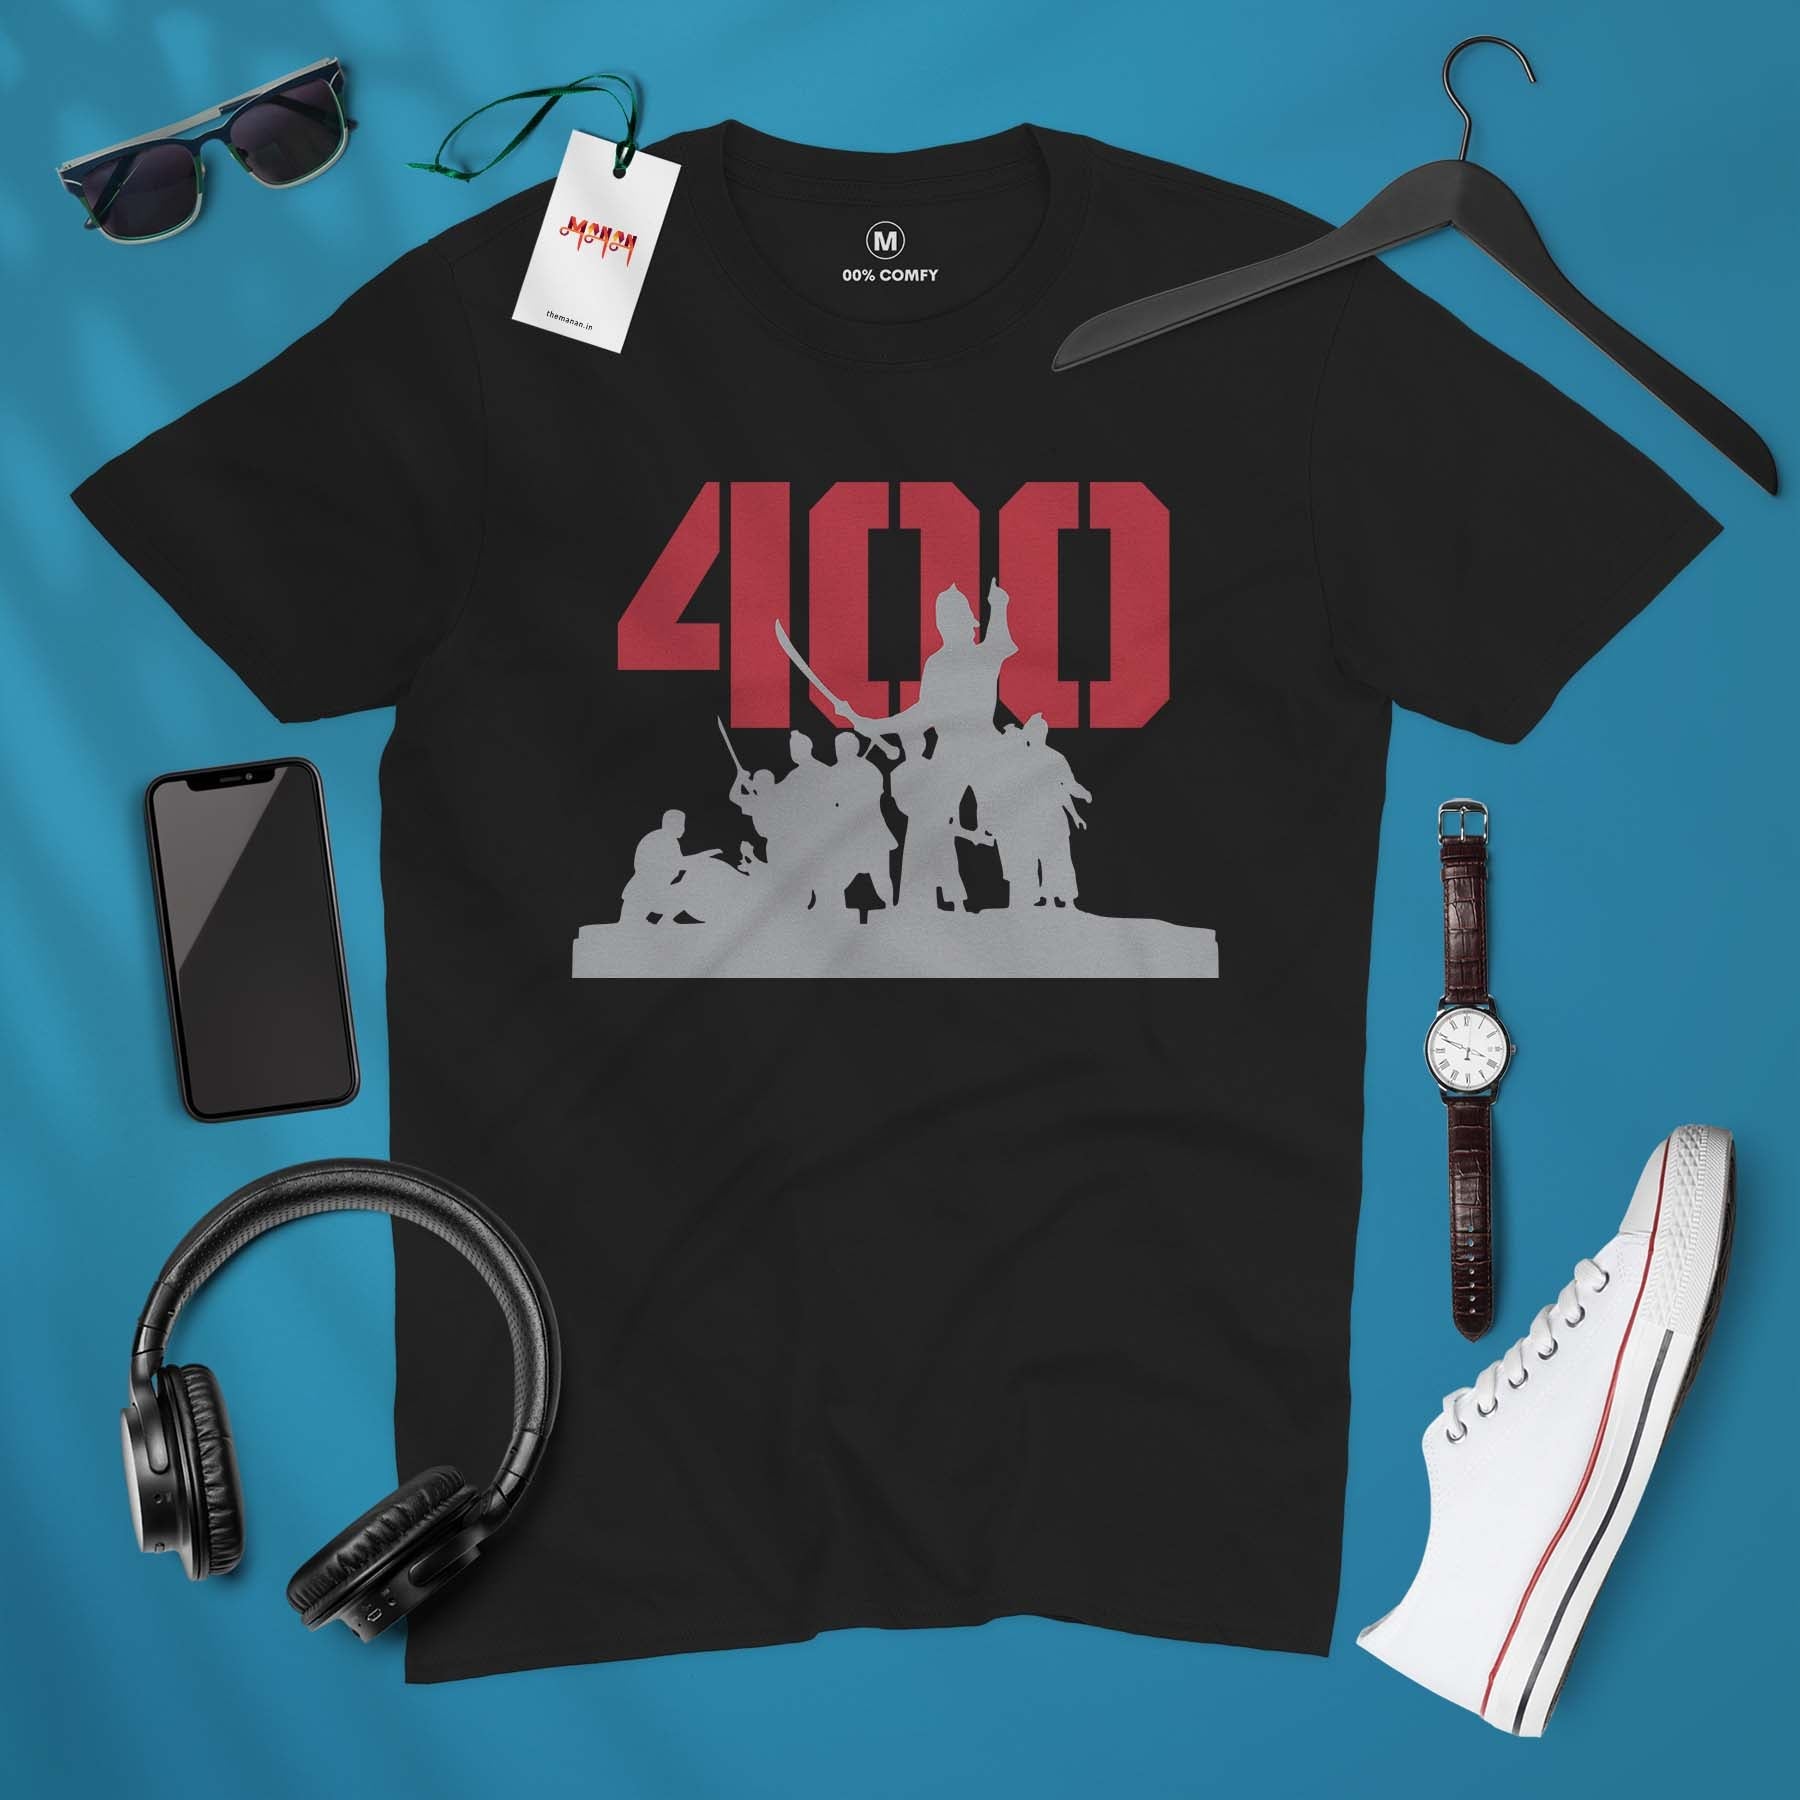 400 - Unisex T-shirt